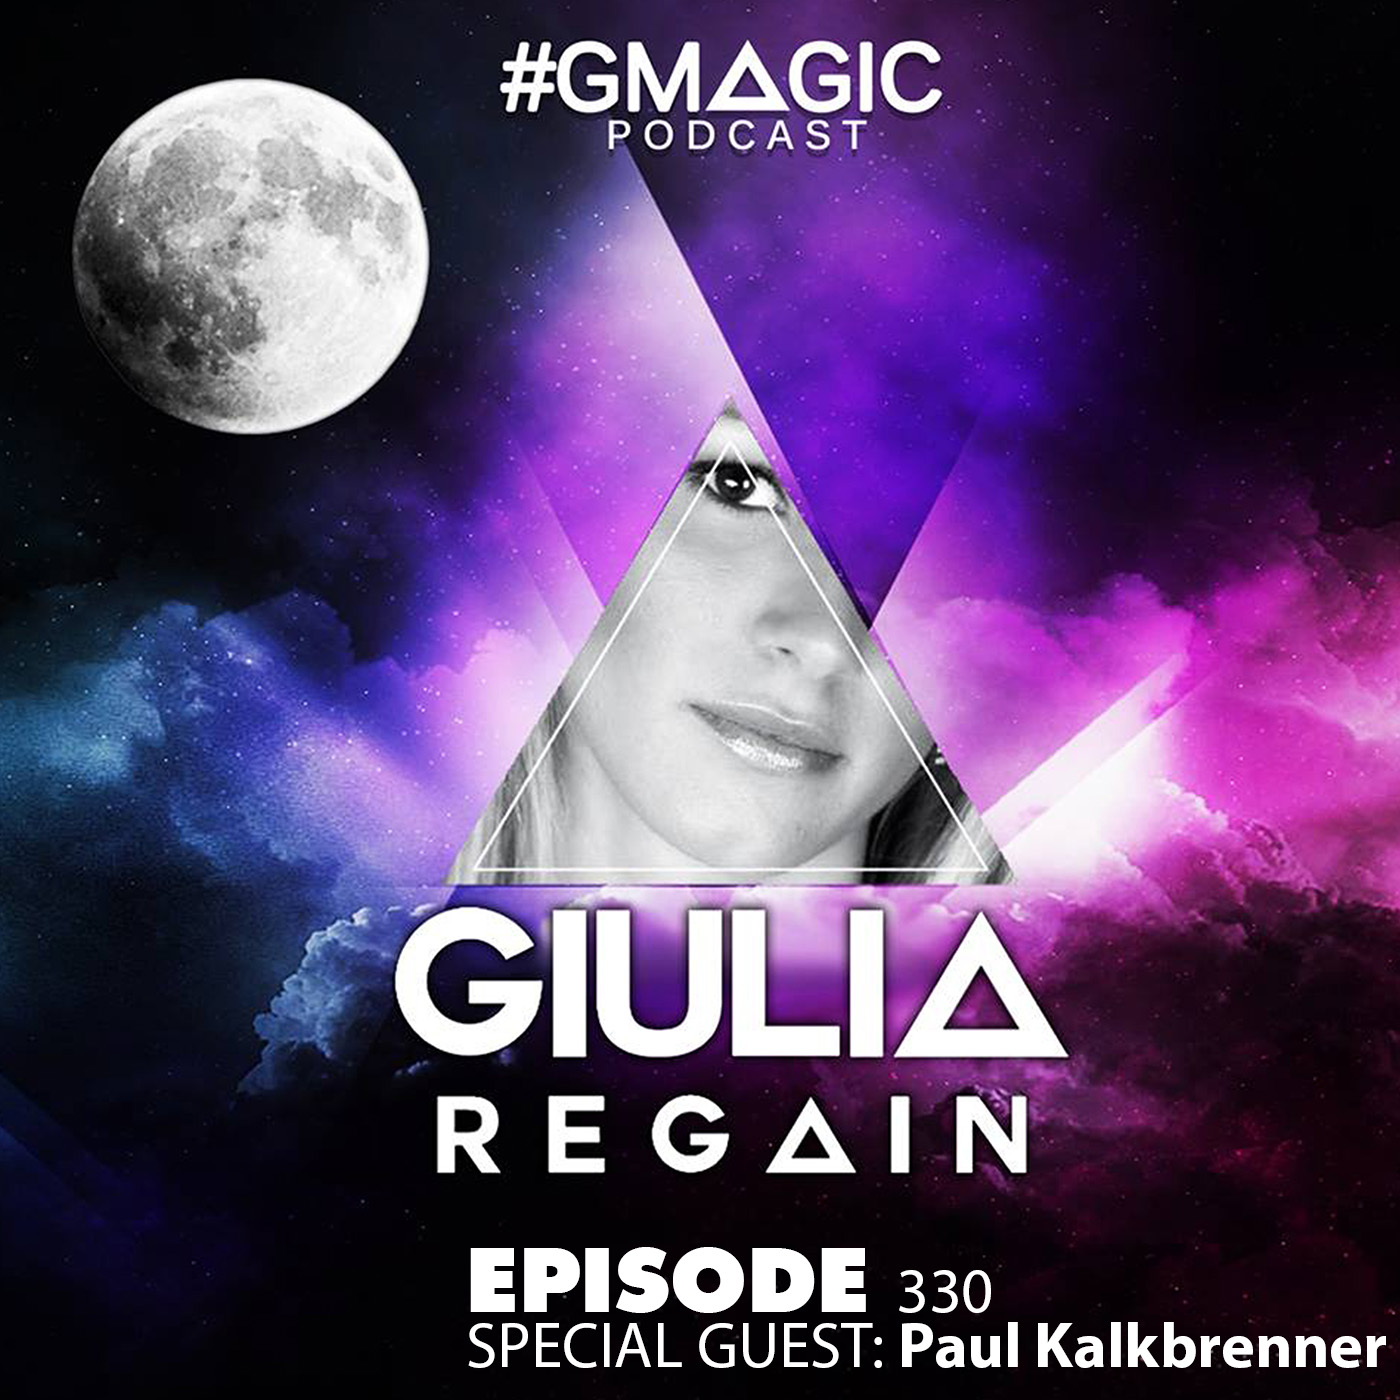 #Gmagic Podcast 330 - Special Guest: Paul Kalkbrenner